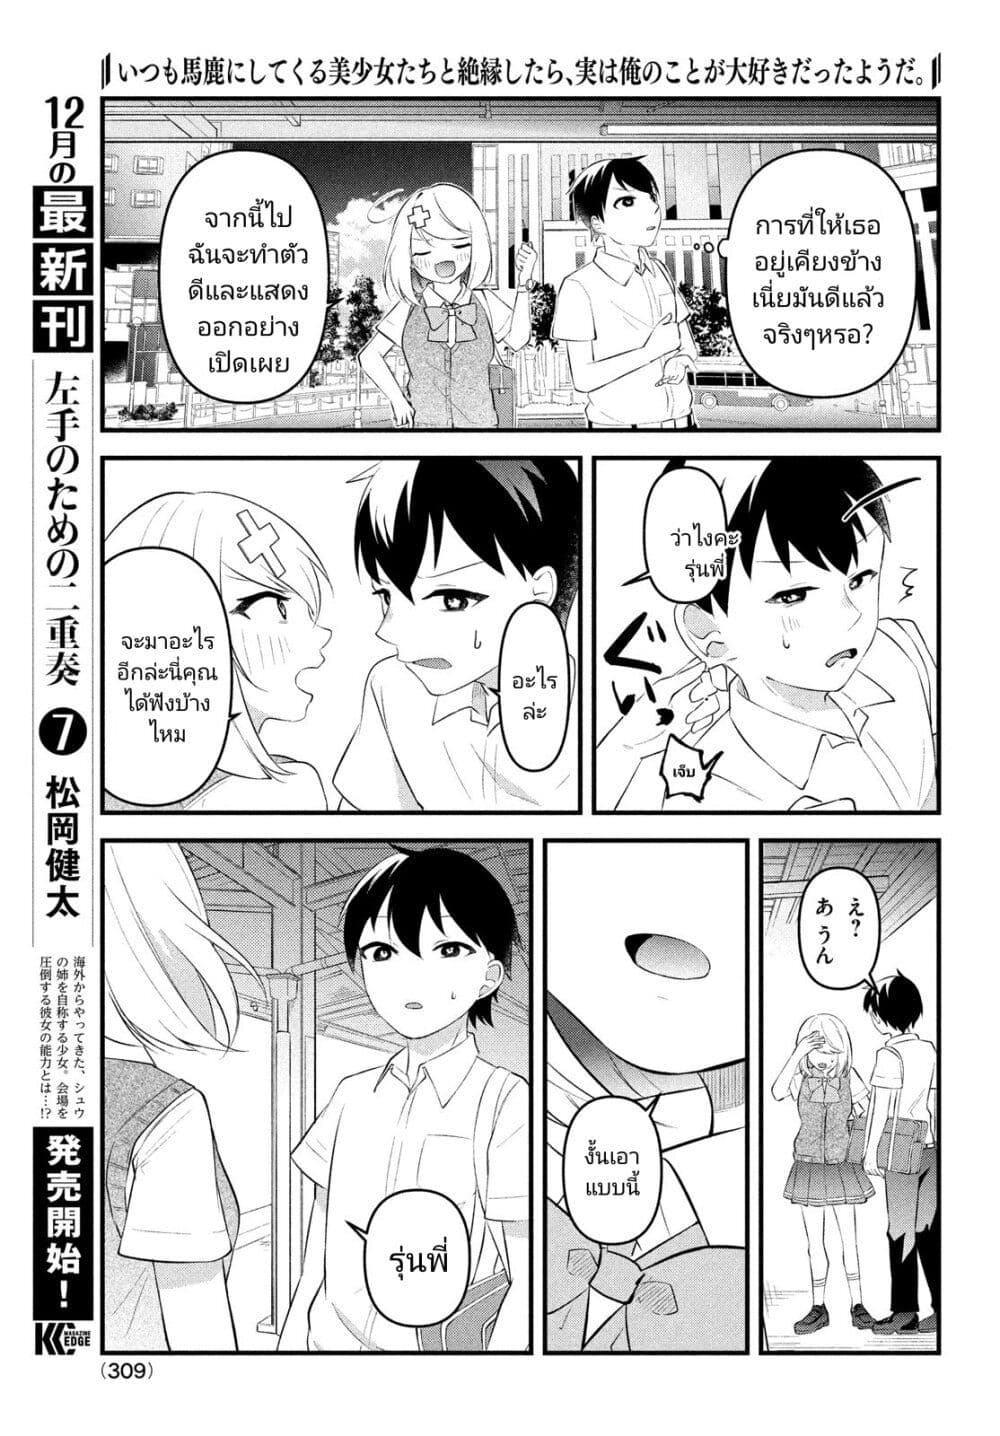 อ่านการ์ตูน Itsumo Baka ni Shite Kuru Bishoujo-tachi to Zetsuen Shitara, Jitsu wa Ore no Koto ga Daisuki Datta You da 4 ภาพที่ 16